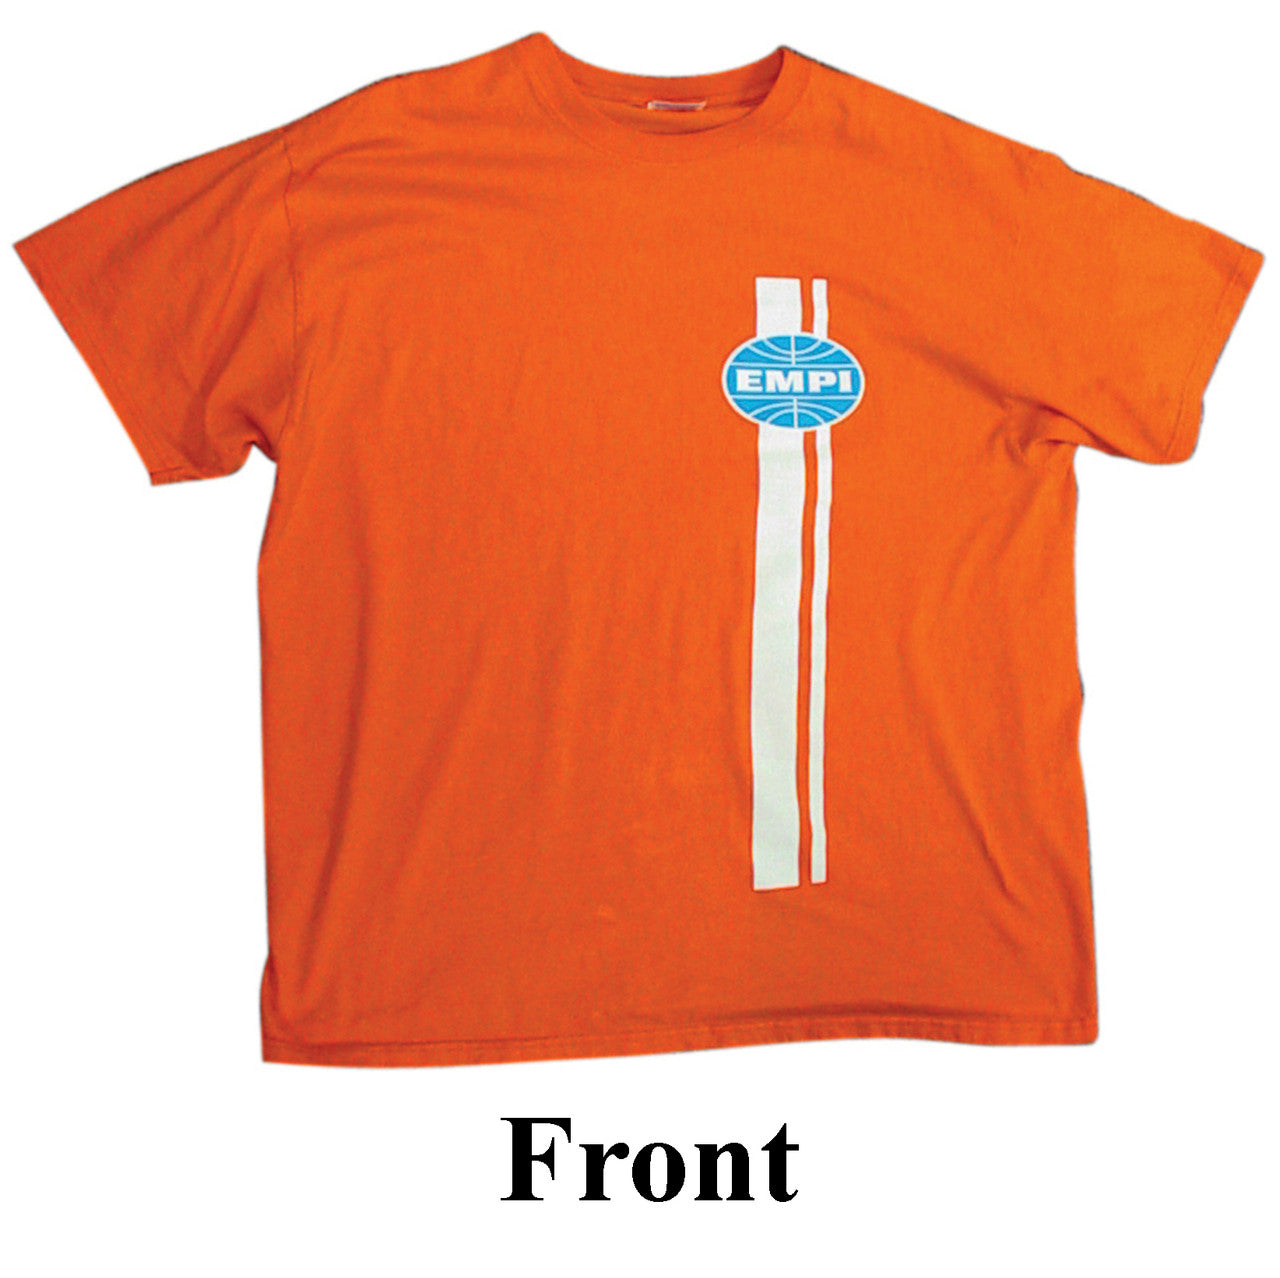 Empi 15-4025 American Classic Orange T-Shirt, Large